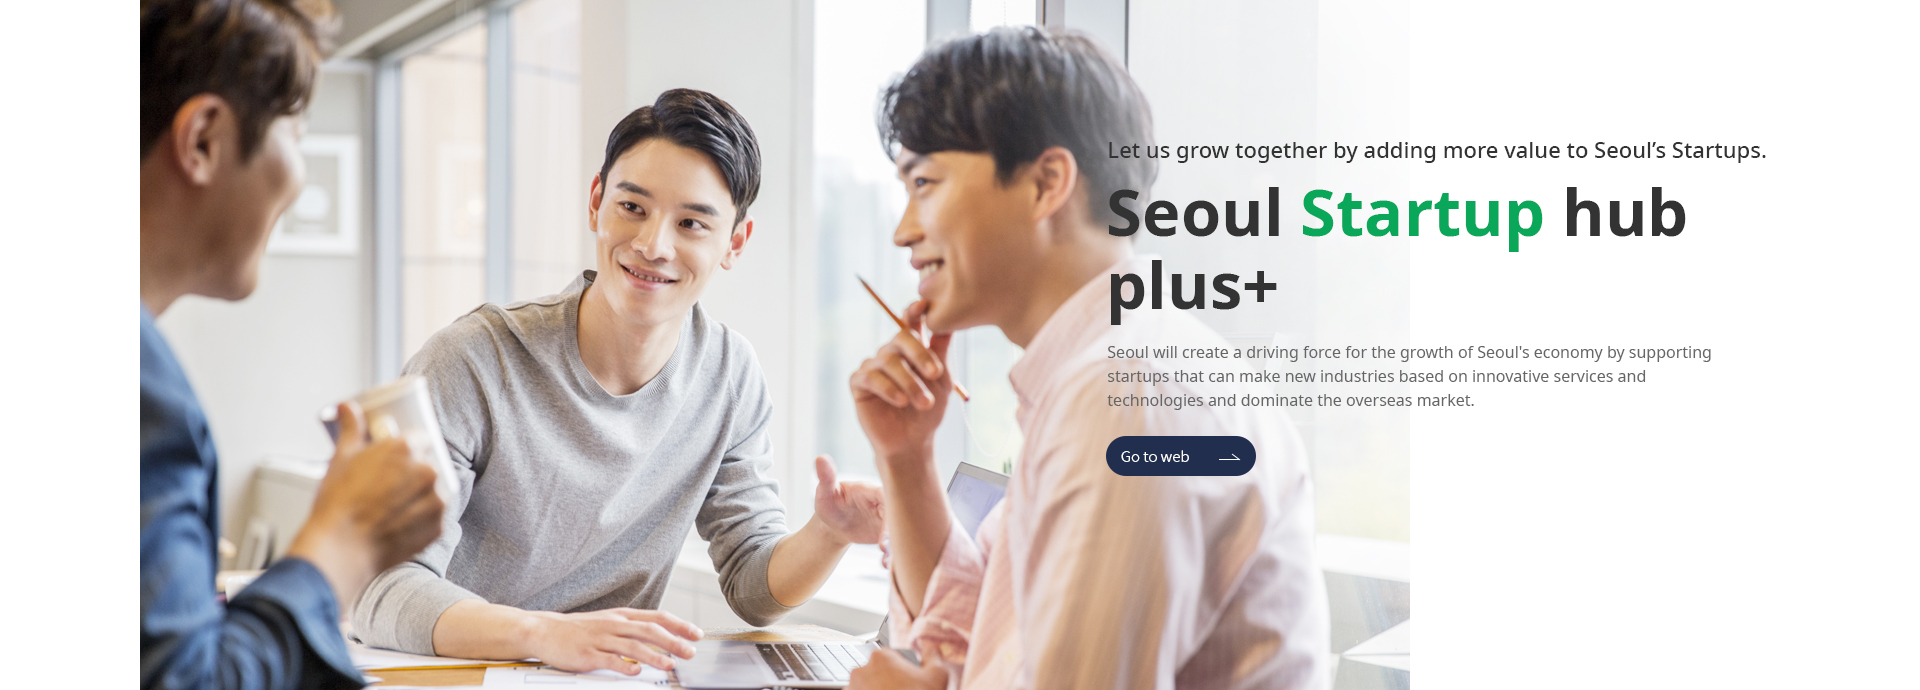 Seoul Startup hub plus+